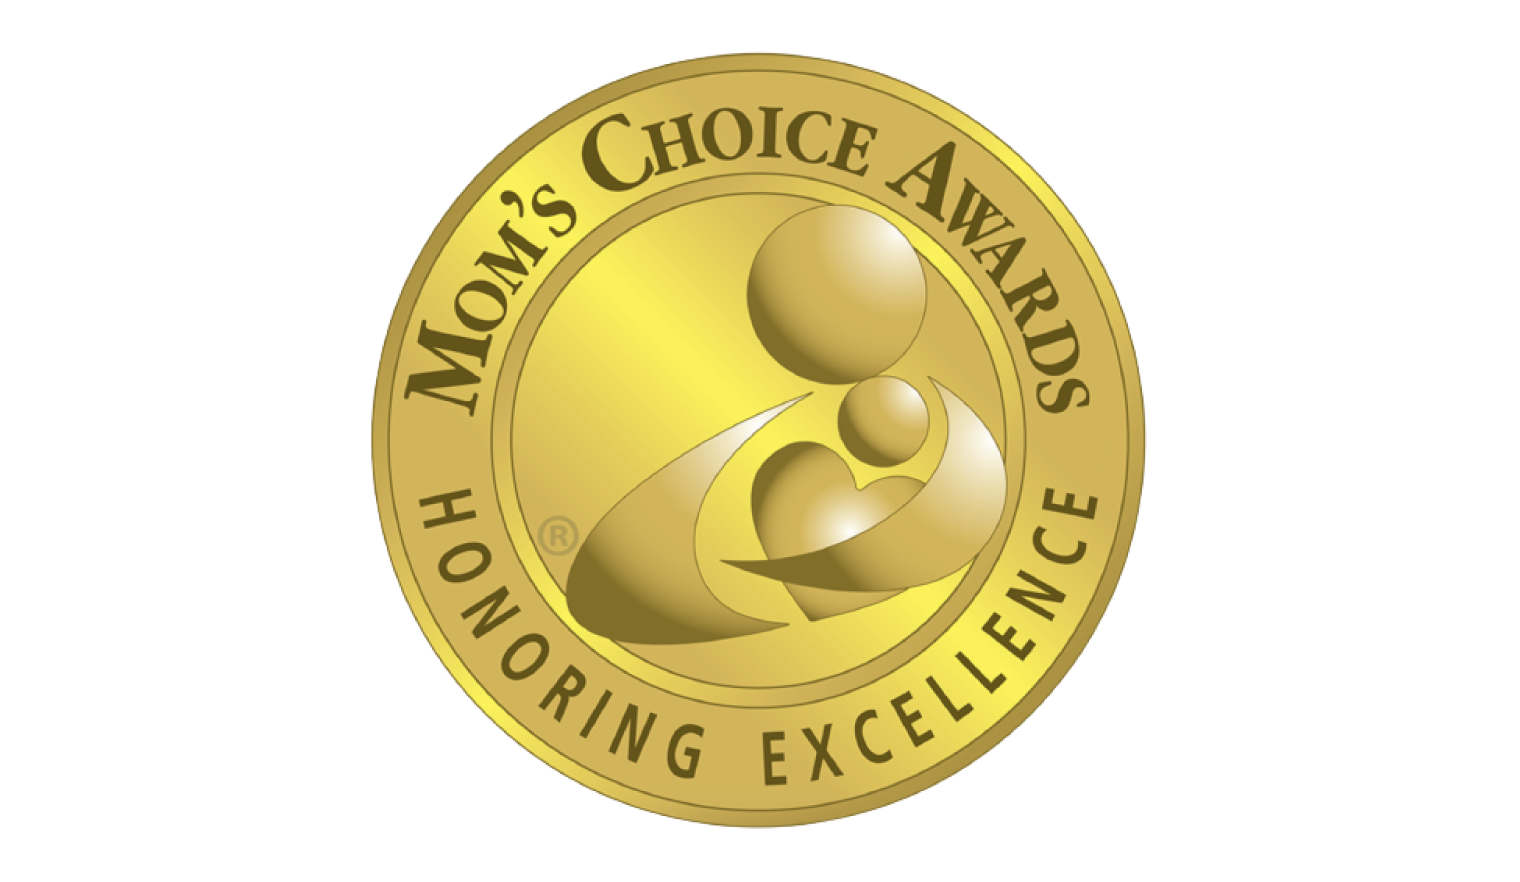 Droyd's Romper Wins Mom's Choice Award